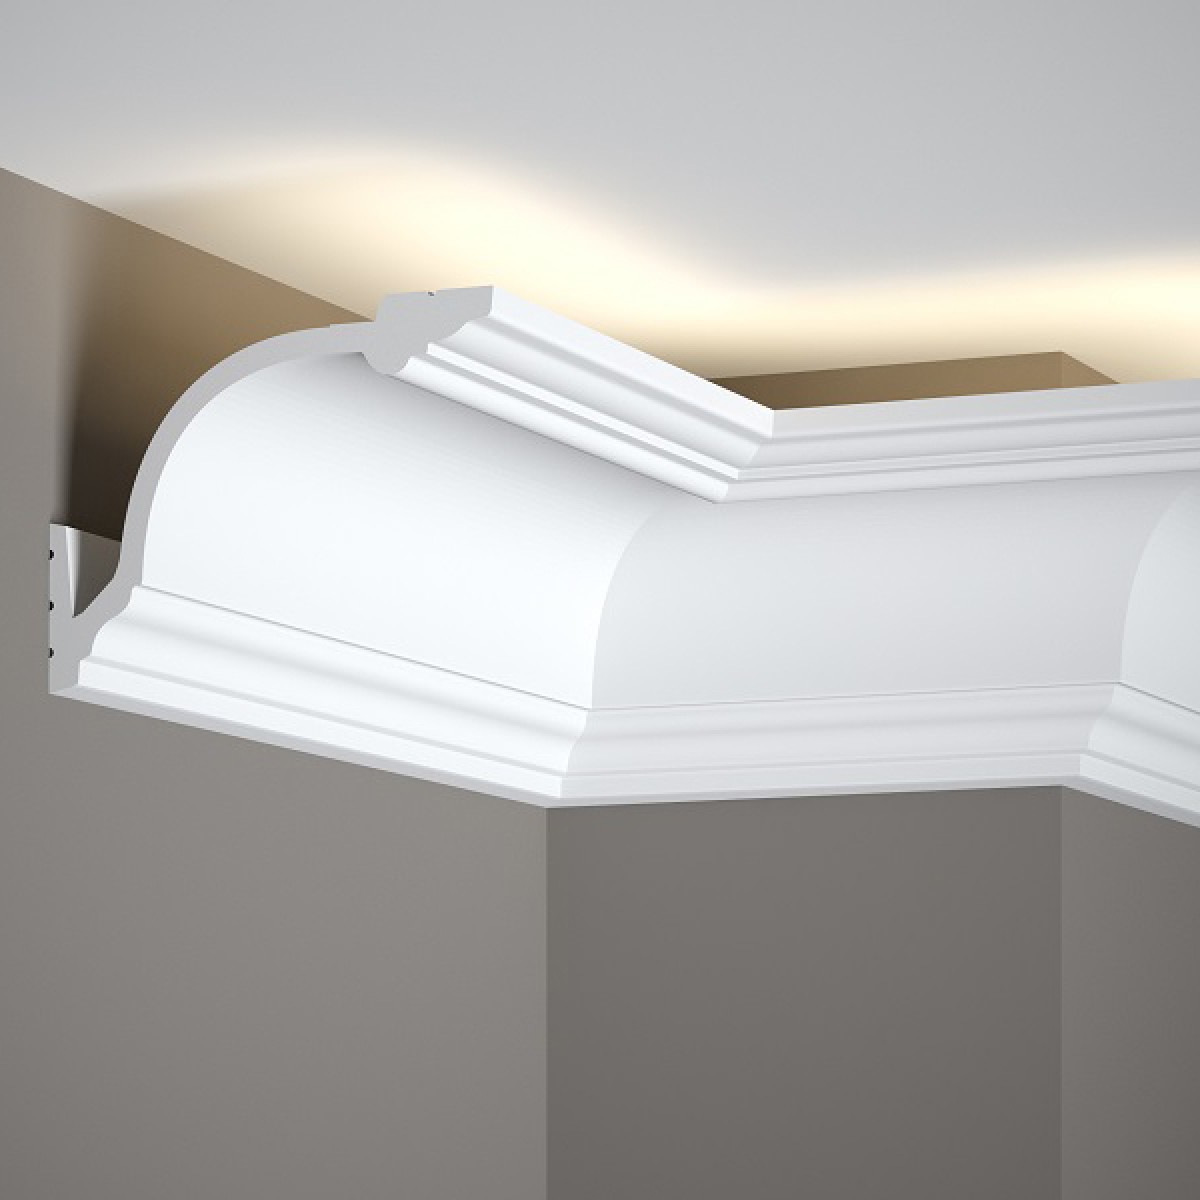 Scafe tavan (iluminat indirect, LED) Mardom Decor MRD-MD156, material: PolyForce